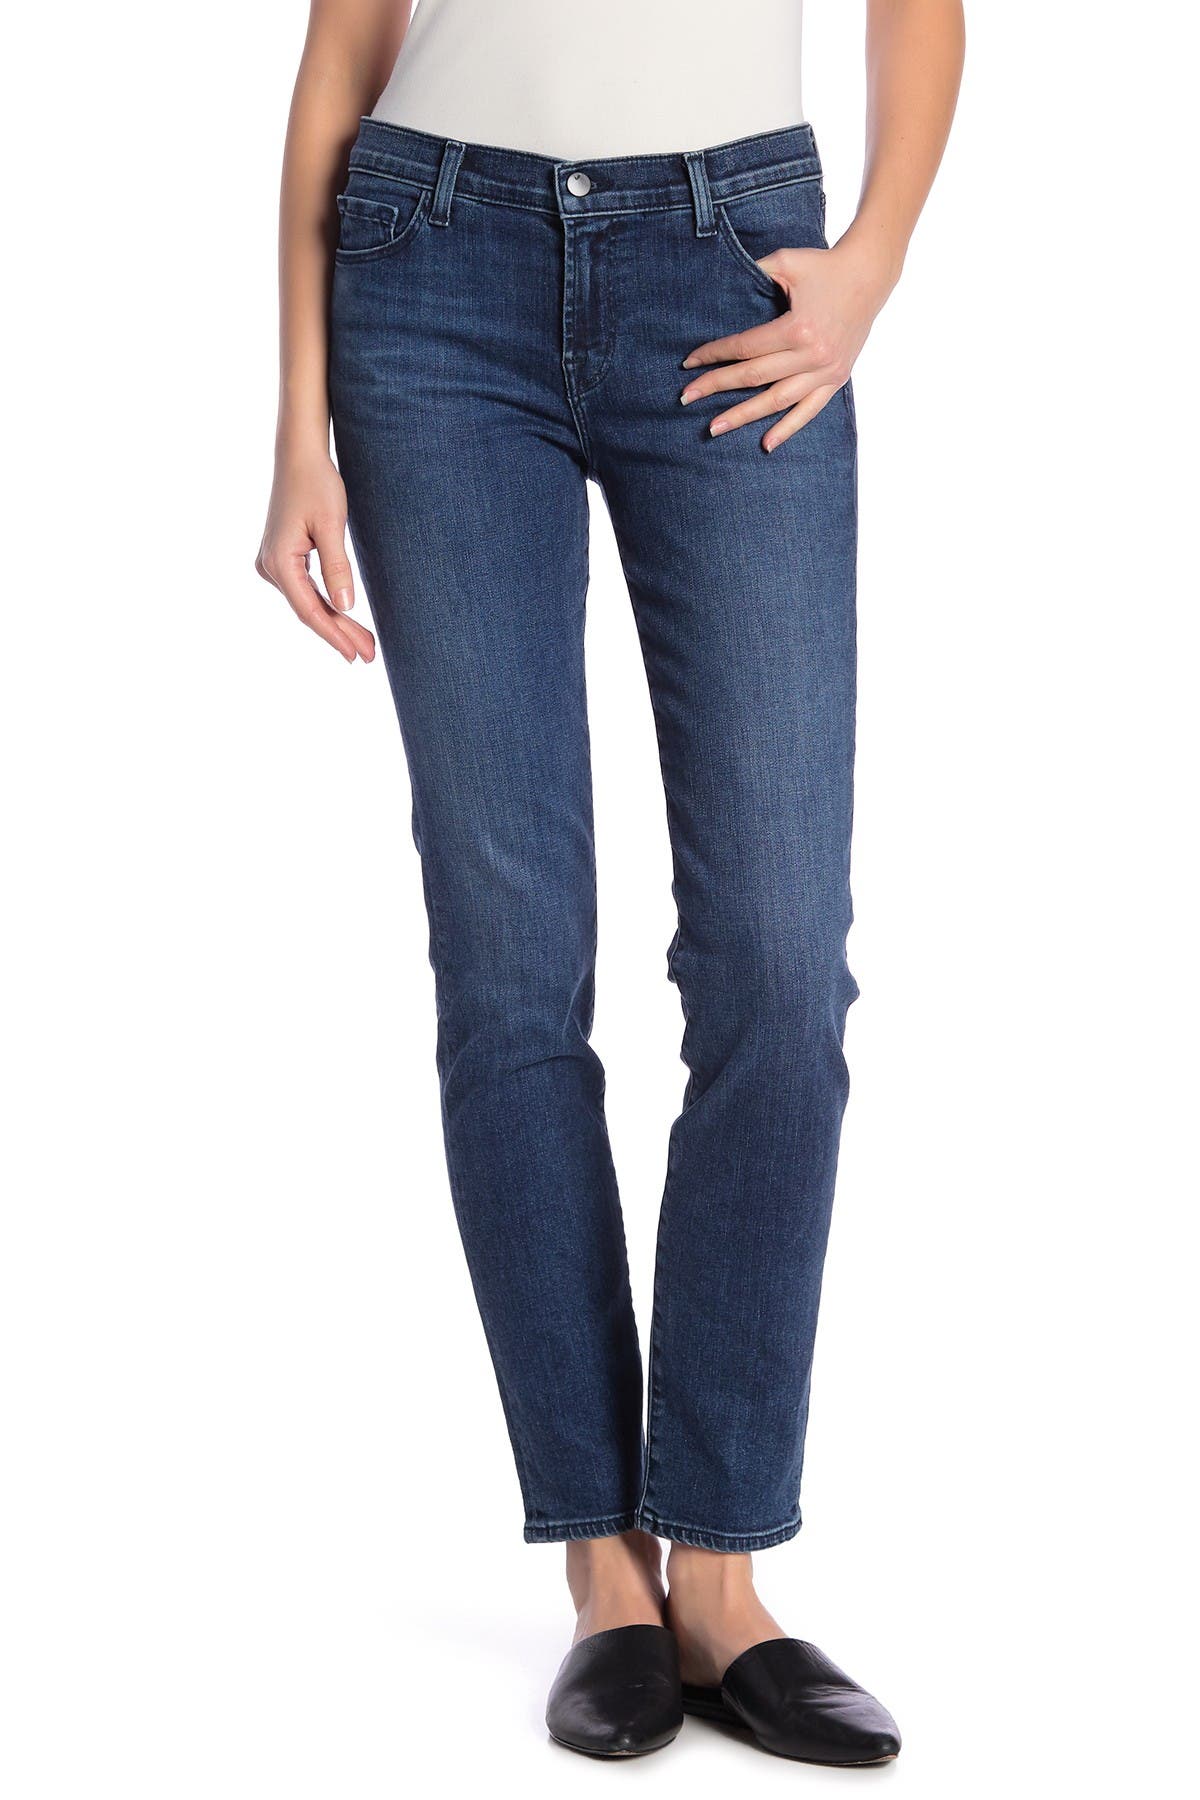 J Brand | Maude Mid Rise Skinny Jeans 